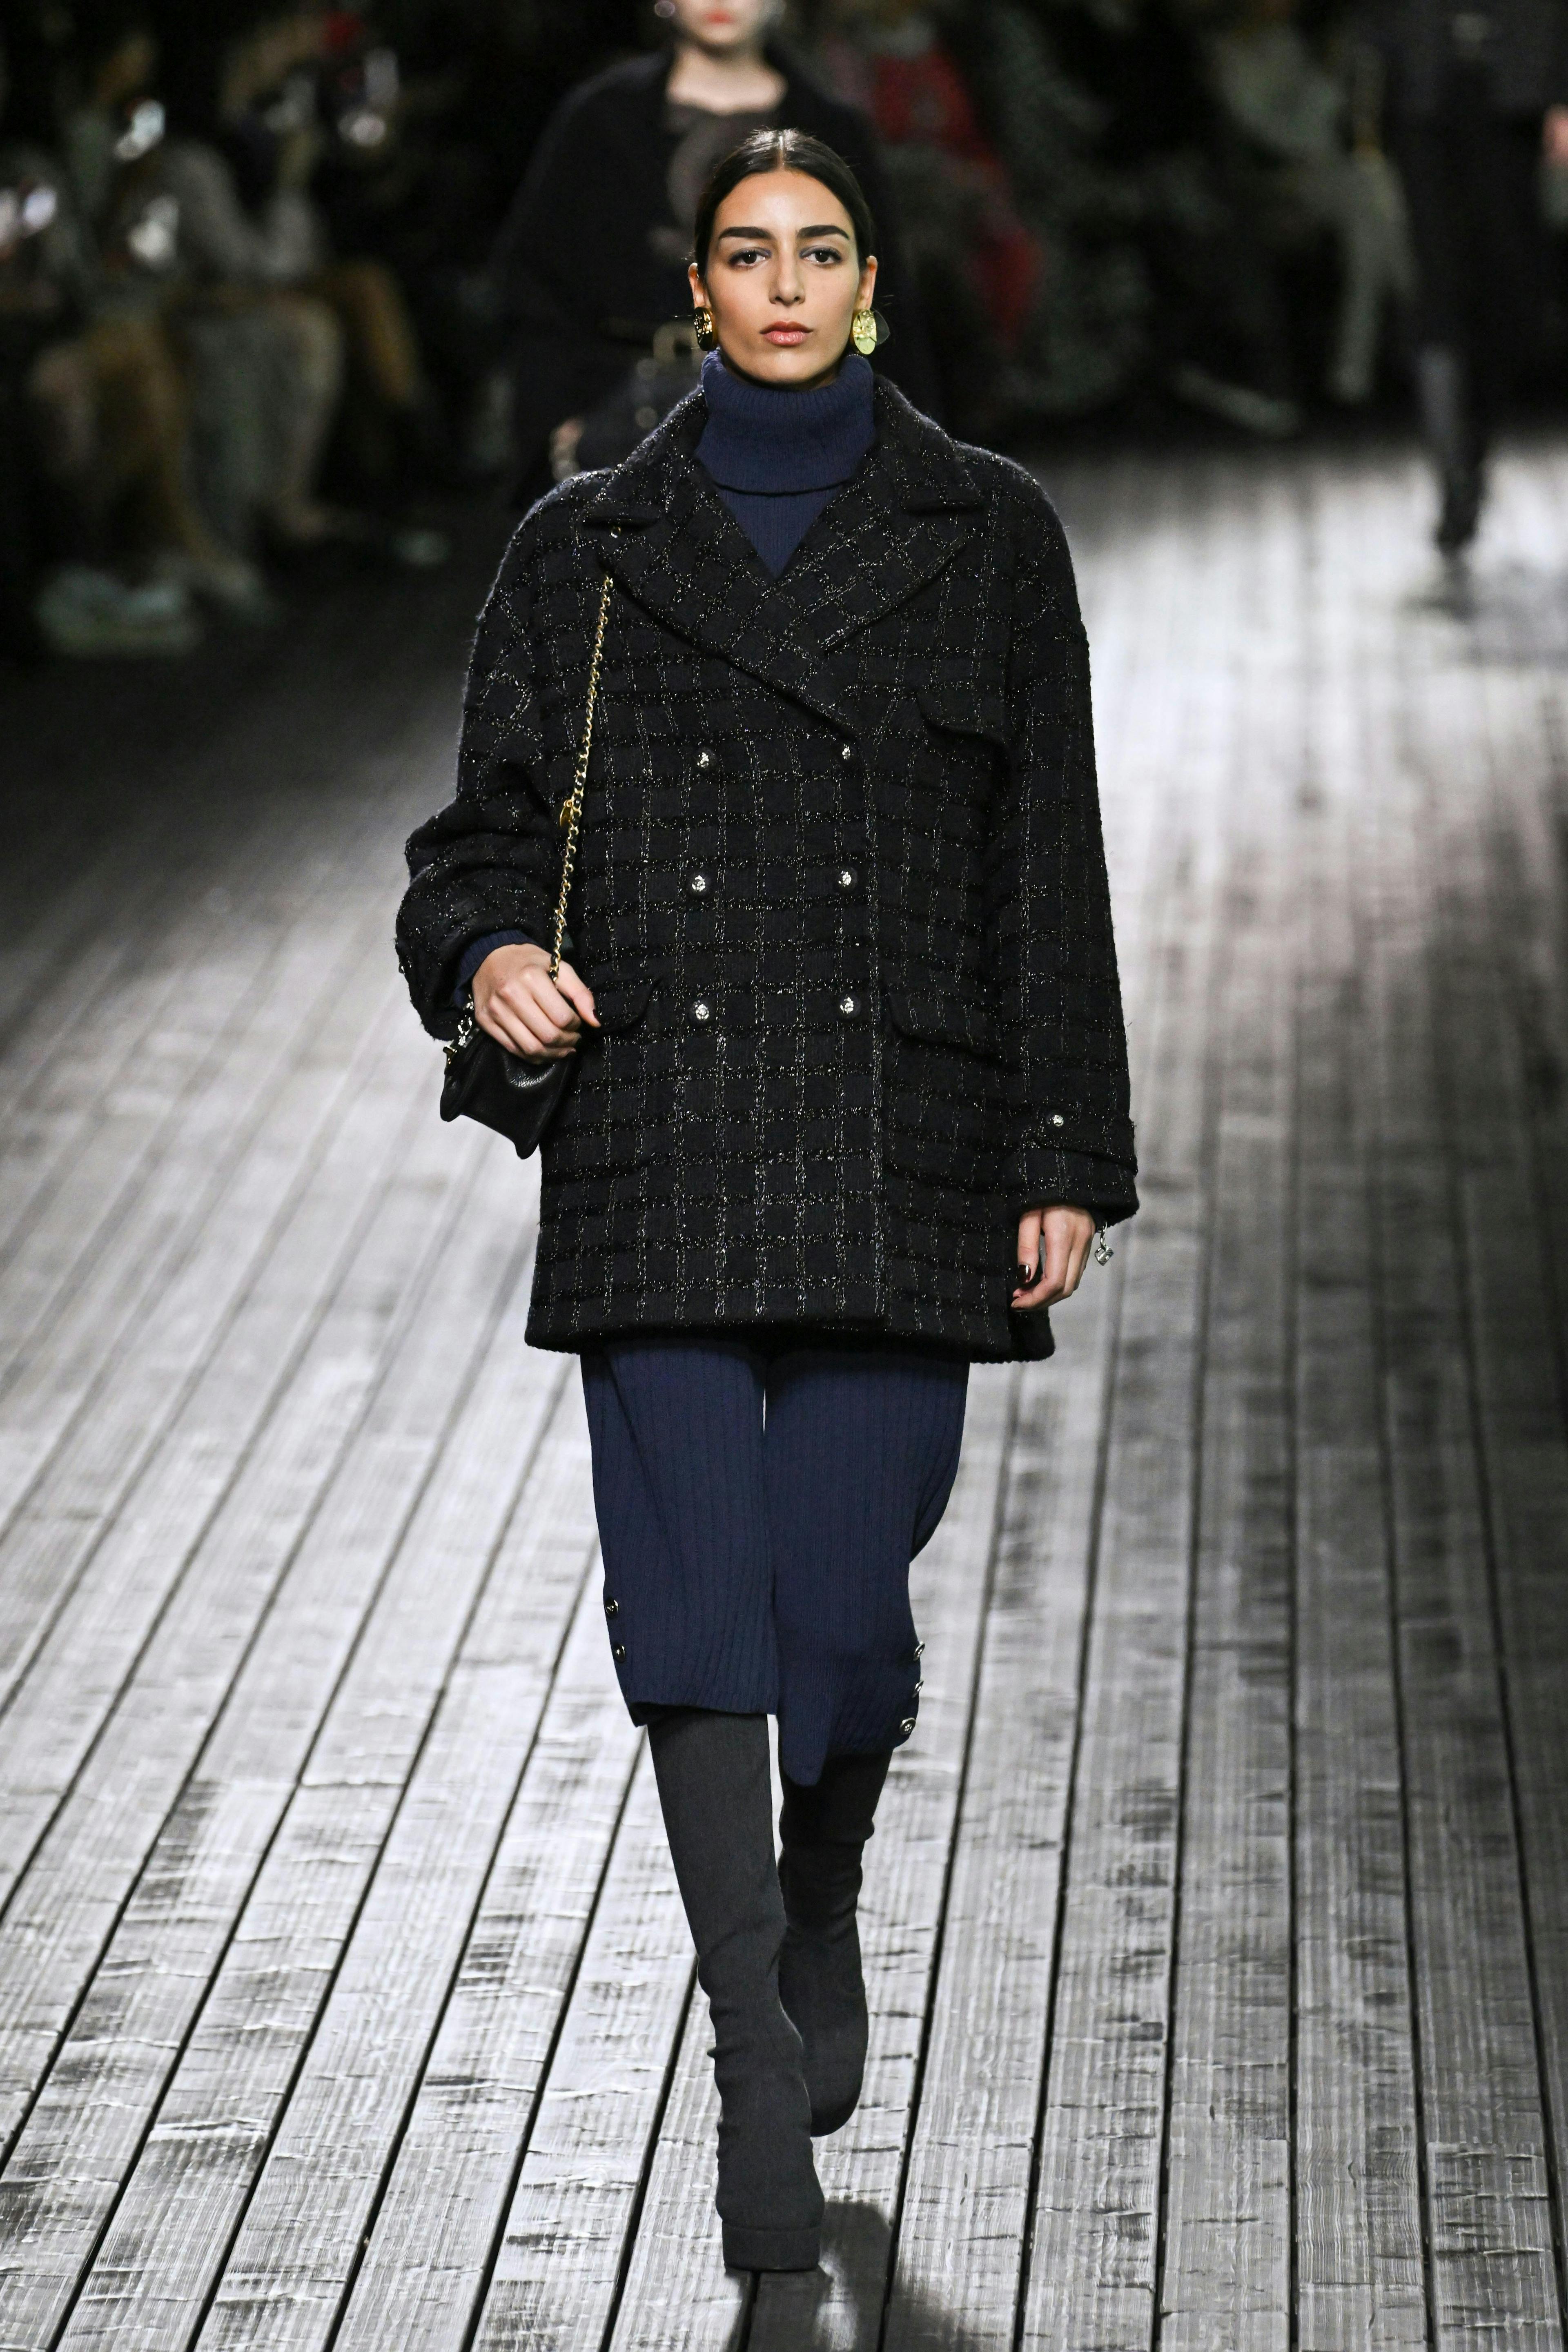 paris clothing coat fashion adult female person woman